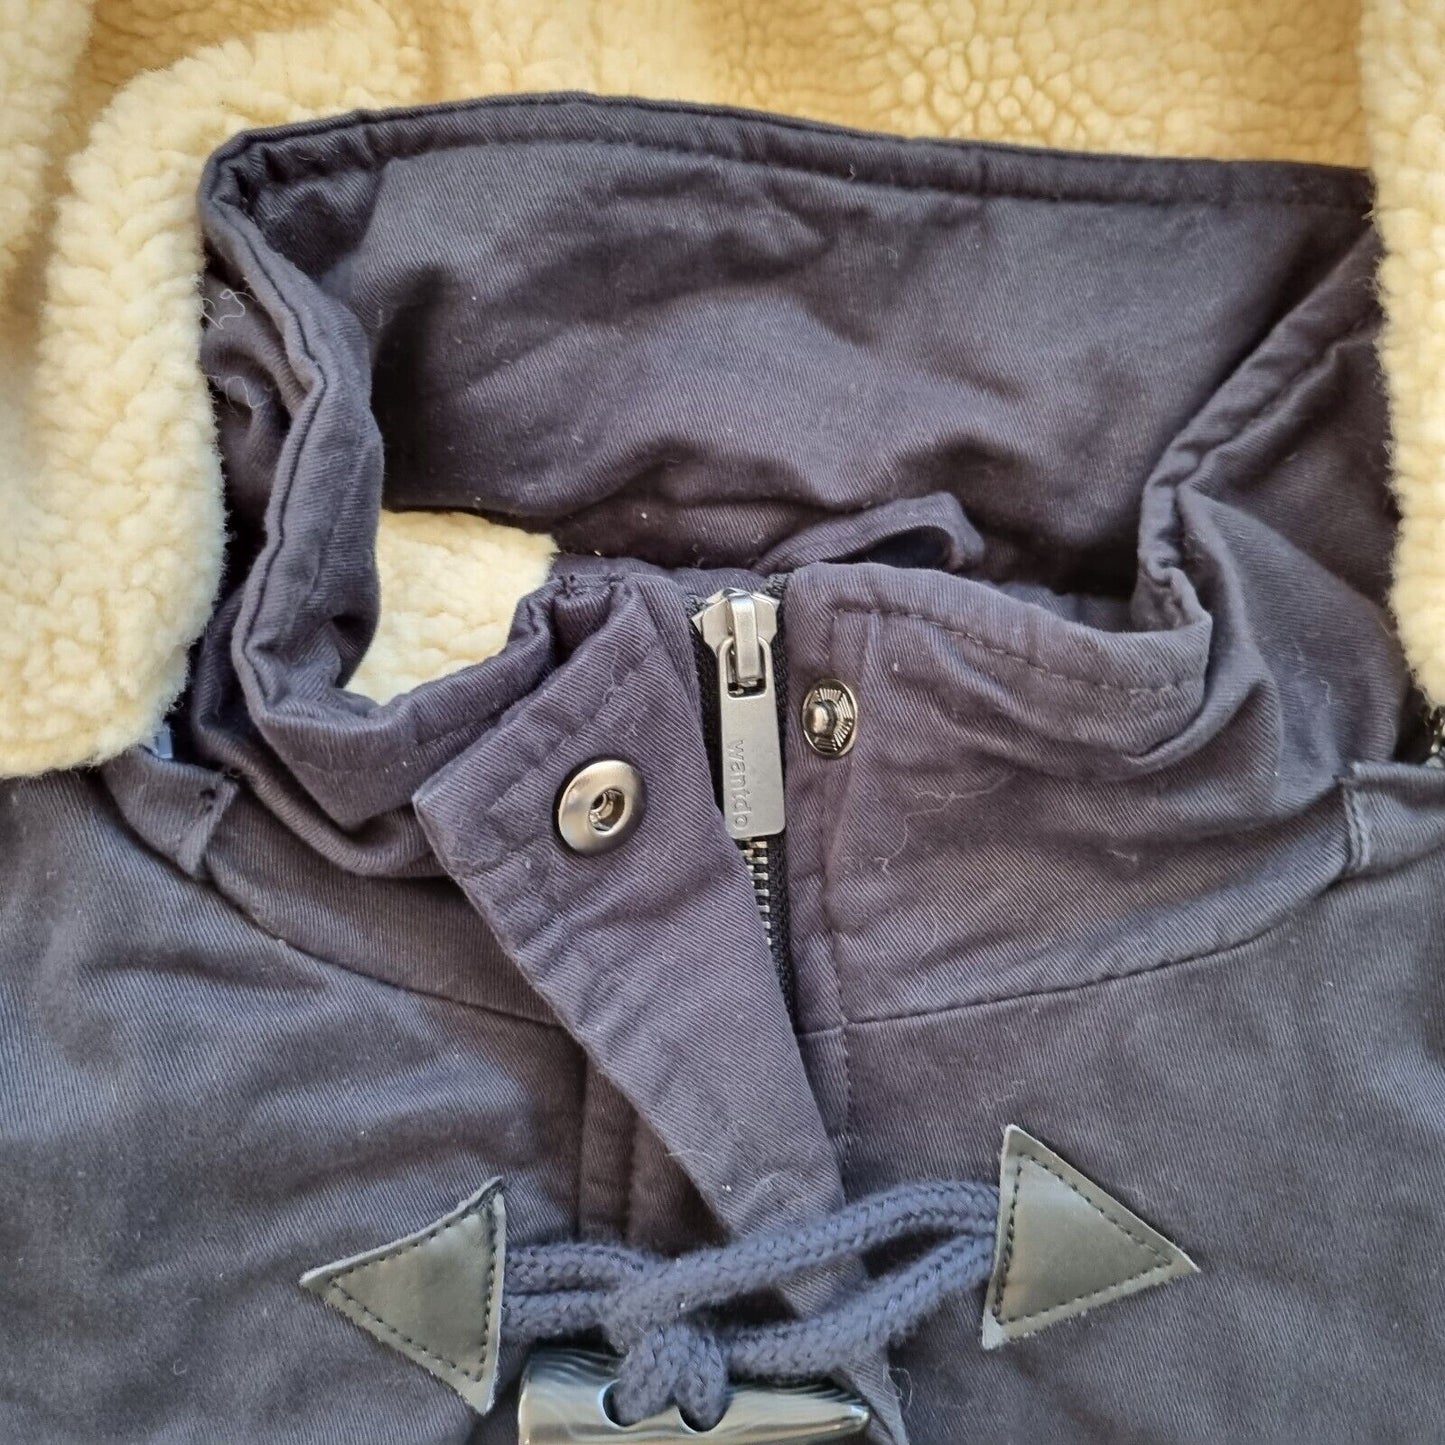 Womens Heavy Winter Duffle Coat Black Fleece Lined Removal Hood Adjustable Waist - Bonnie Lassio